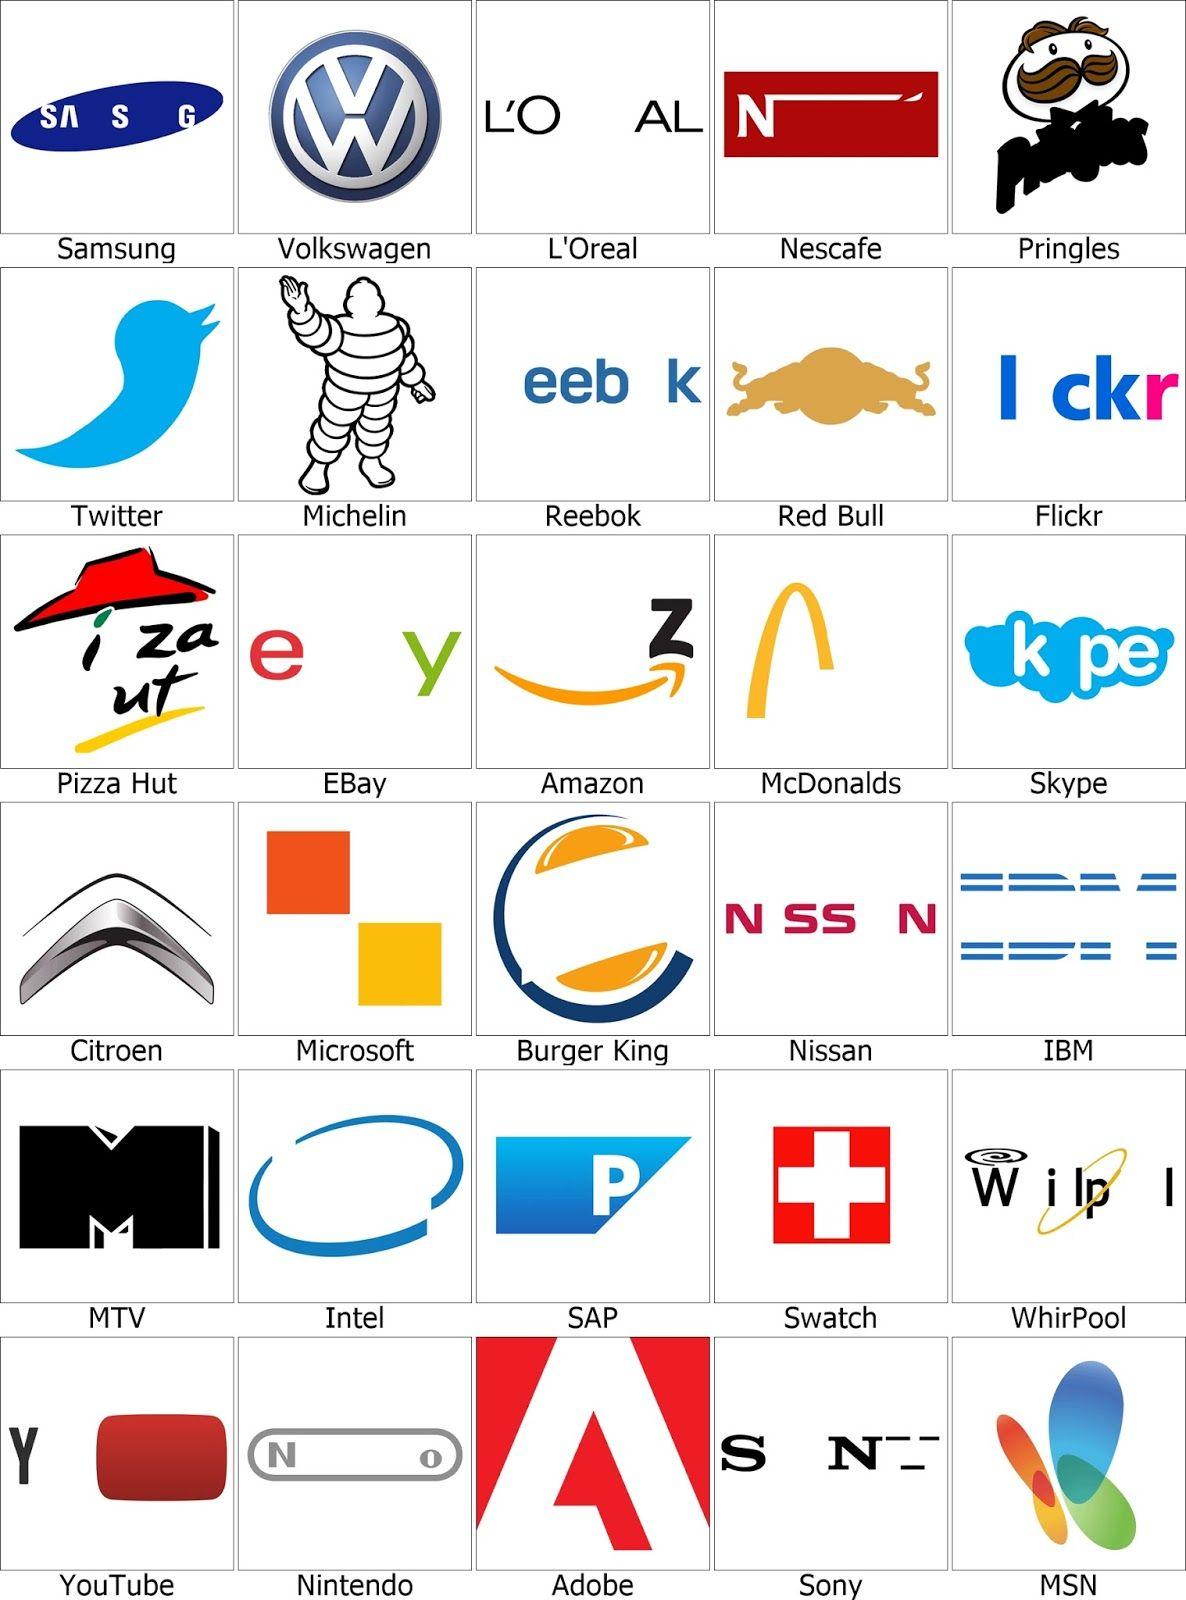 Multinational Computer Technology Company Logo - Multinational Computer Technology Company Logos